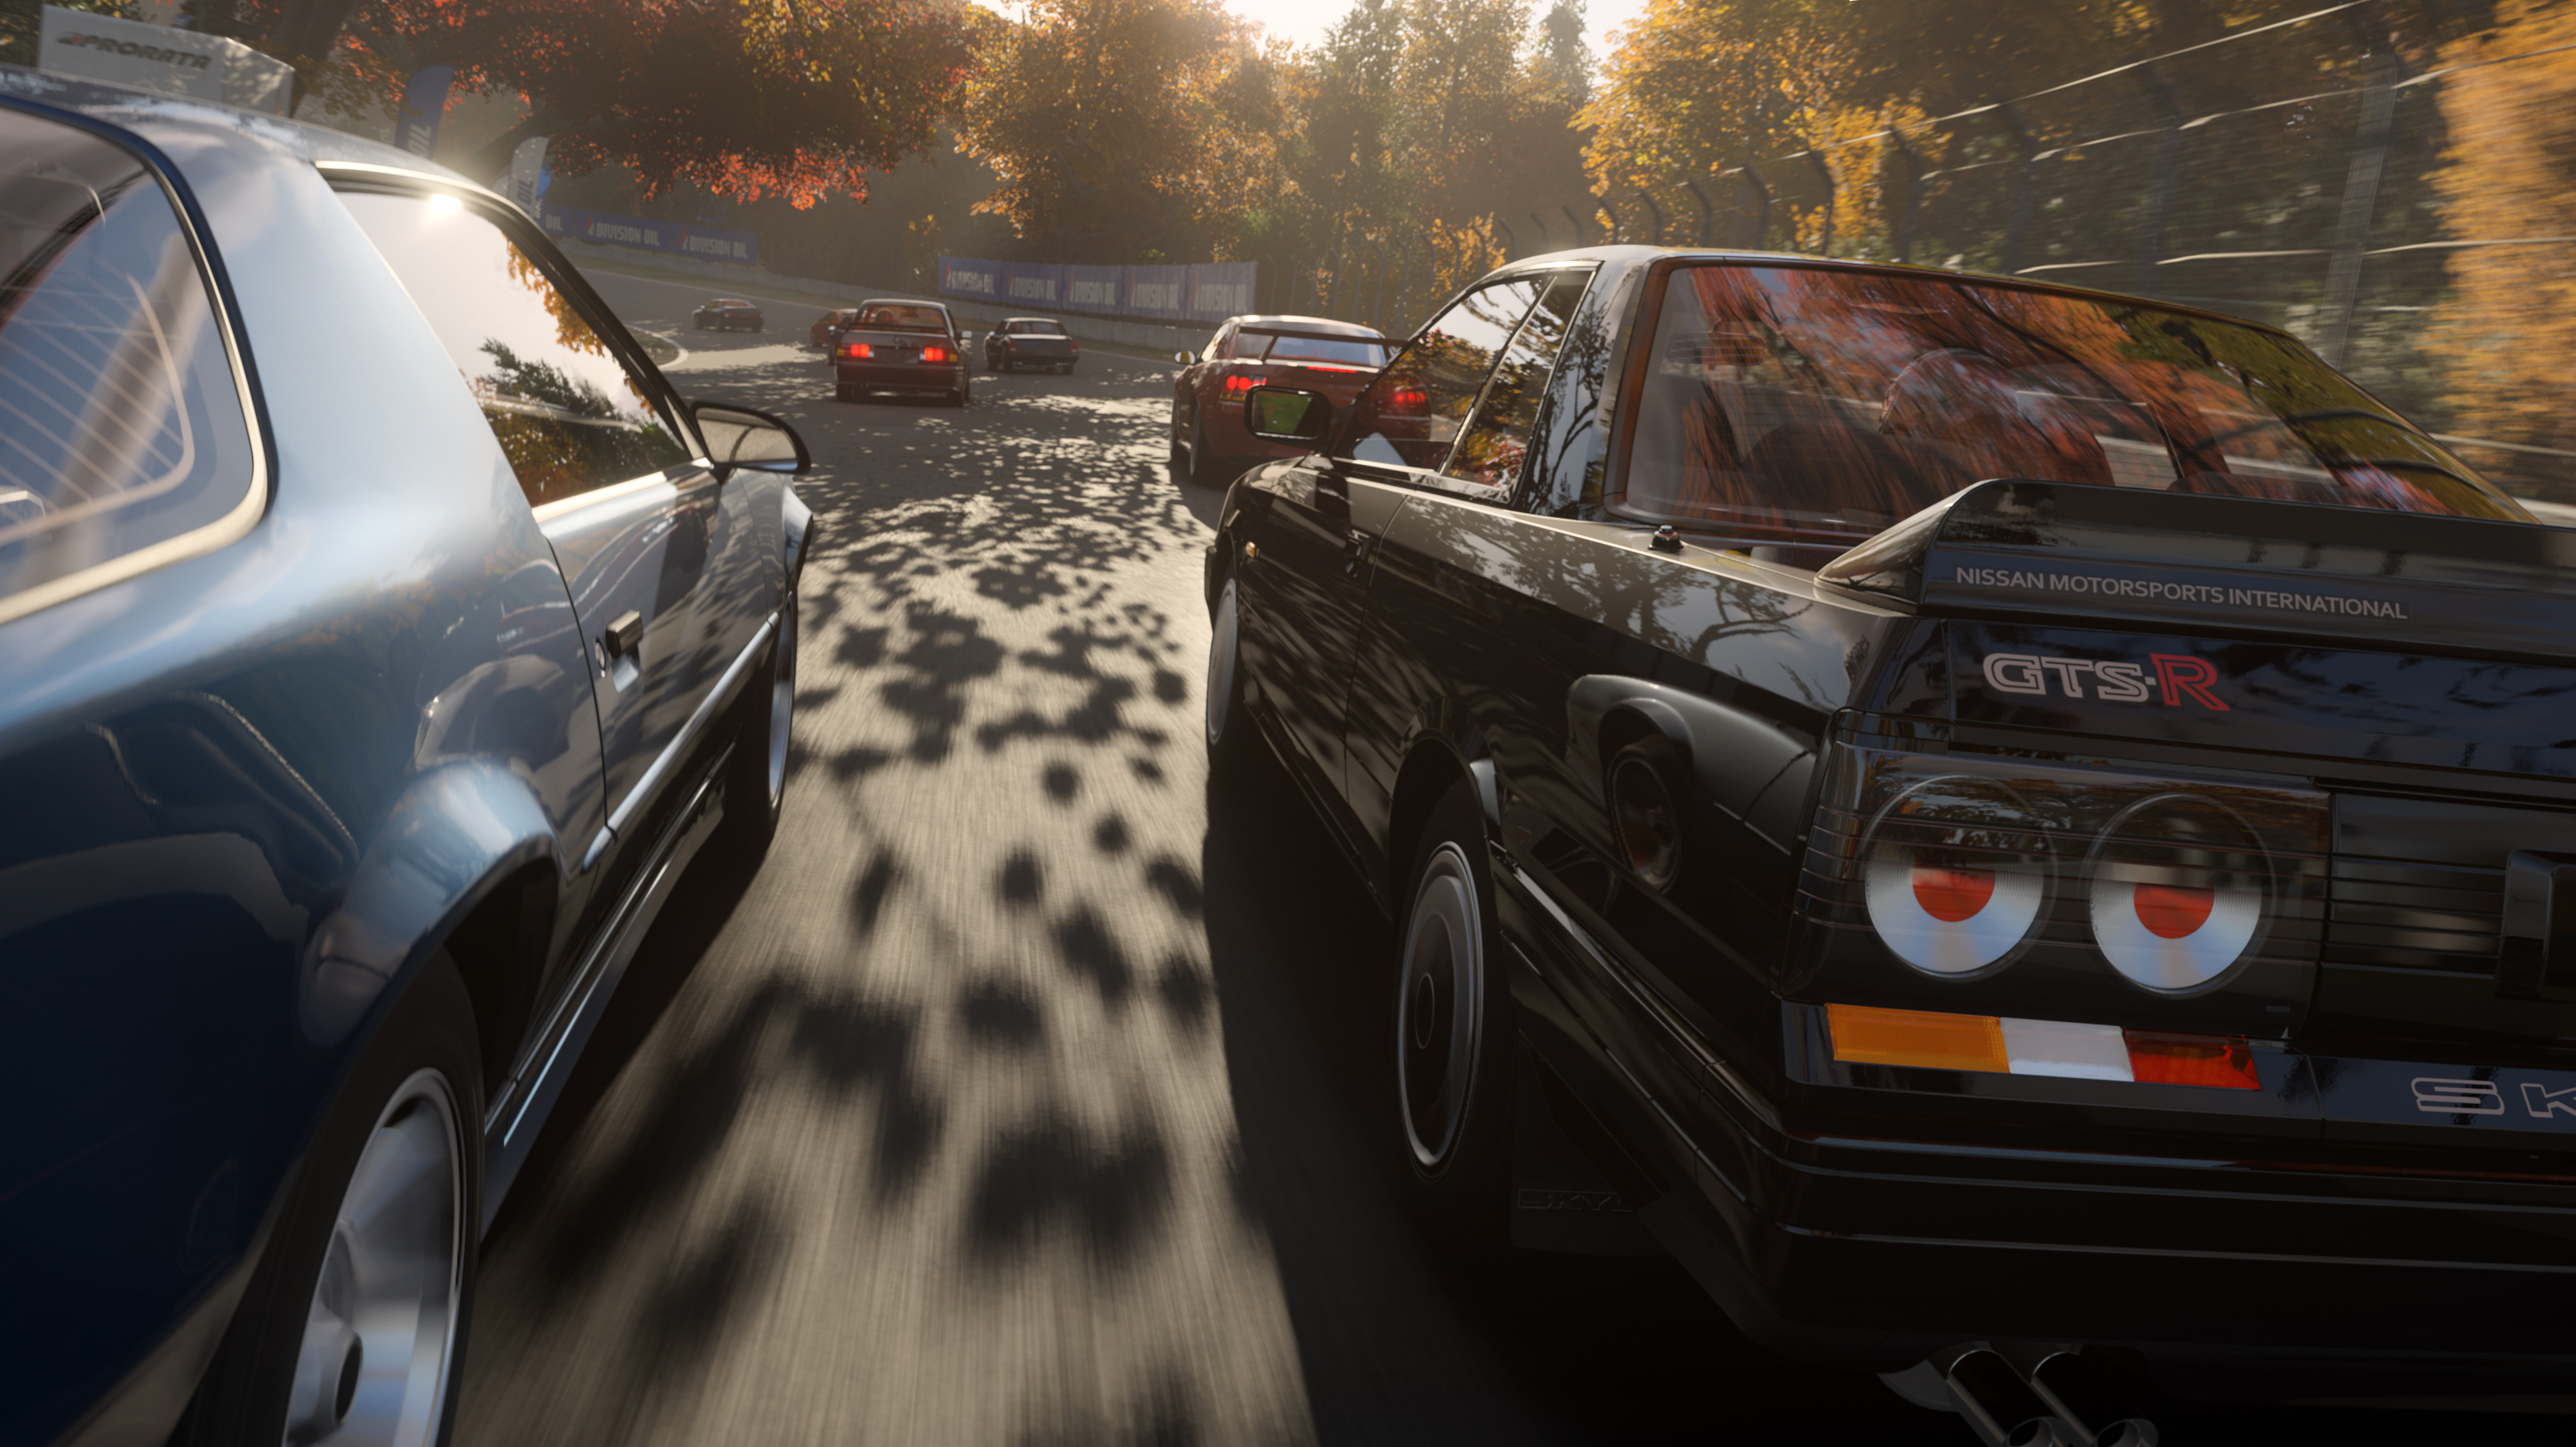 Forza Motorsport 6: Apex New Trailer Shows off Pretty PC Graphics